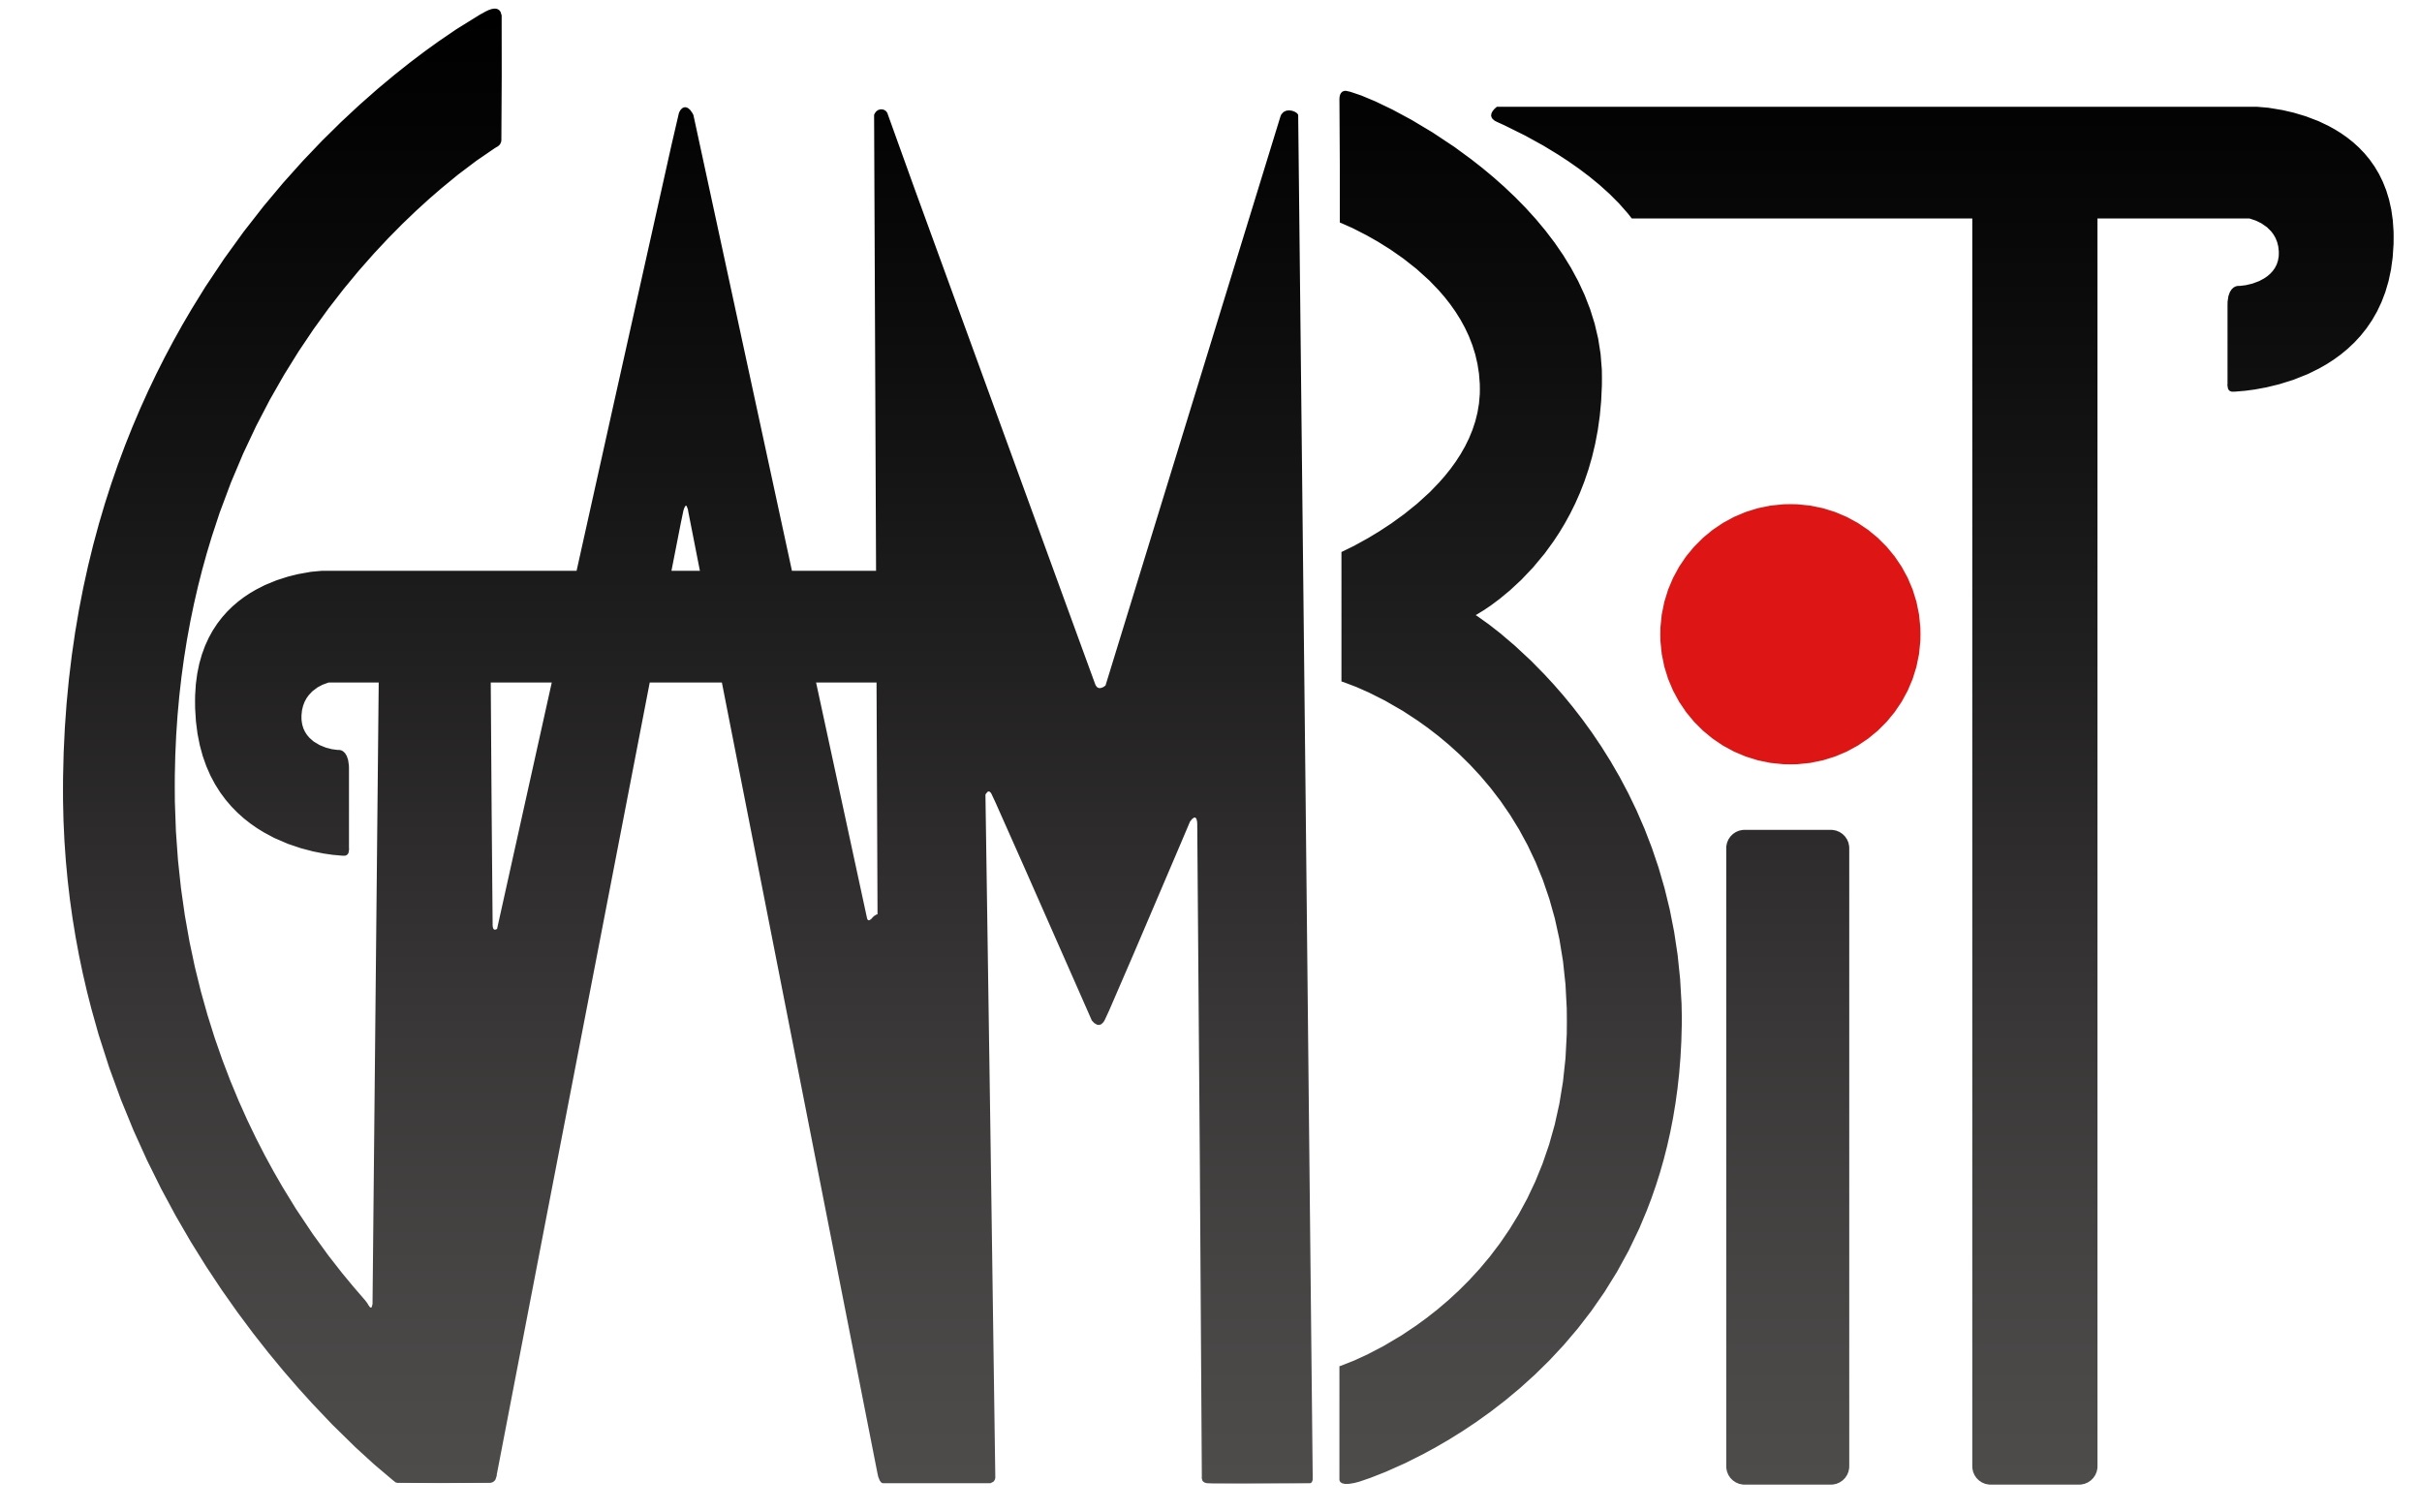 GAMBIT Logo.jpg bb3d6ace32f98c56c925817939755943